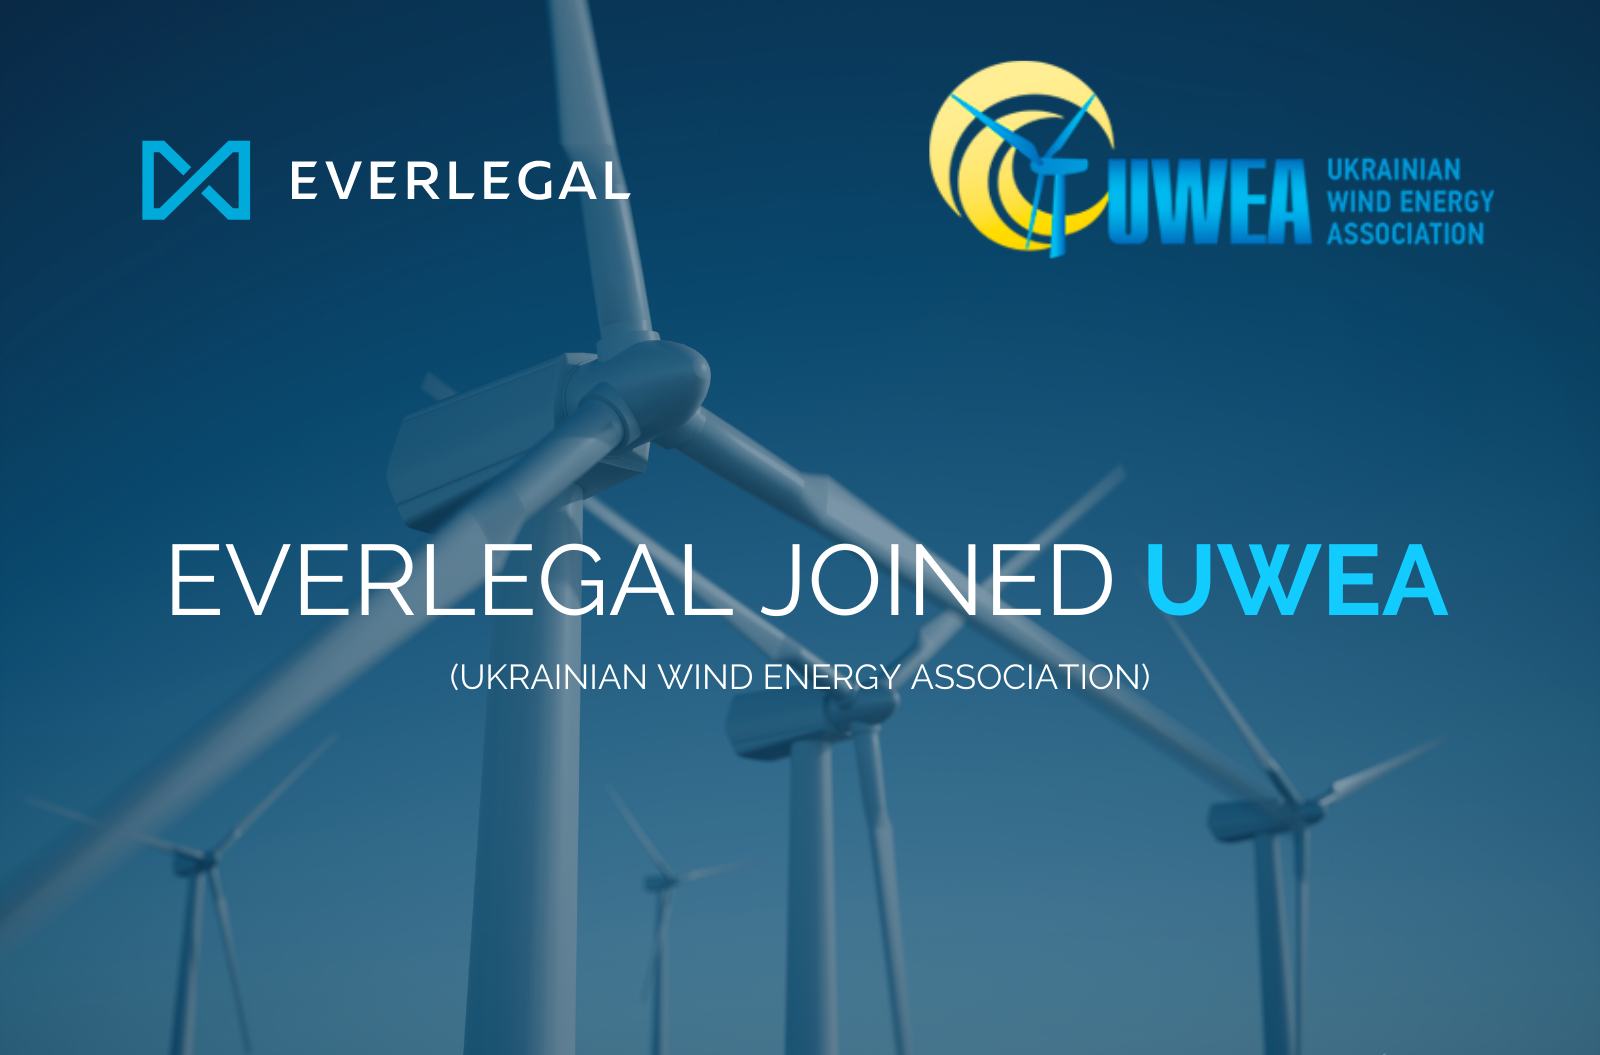 EVERLEGAL joined UWEA (Ukrainian Wind Energy Association)